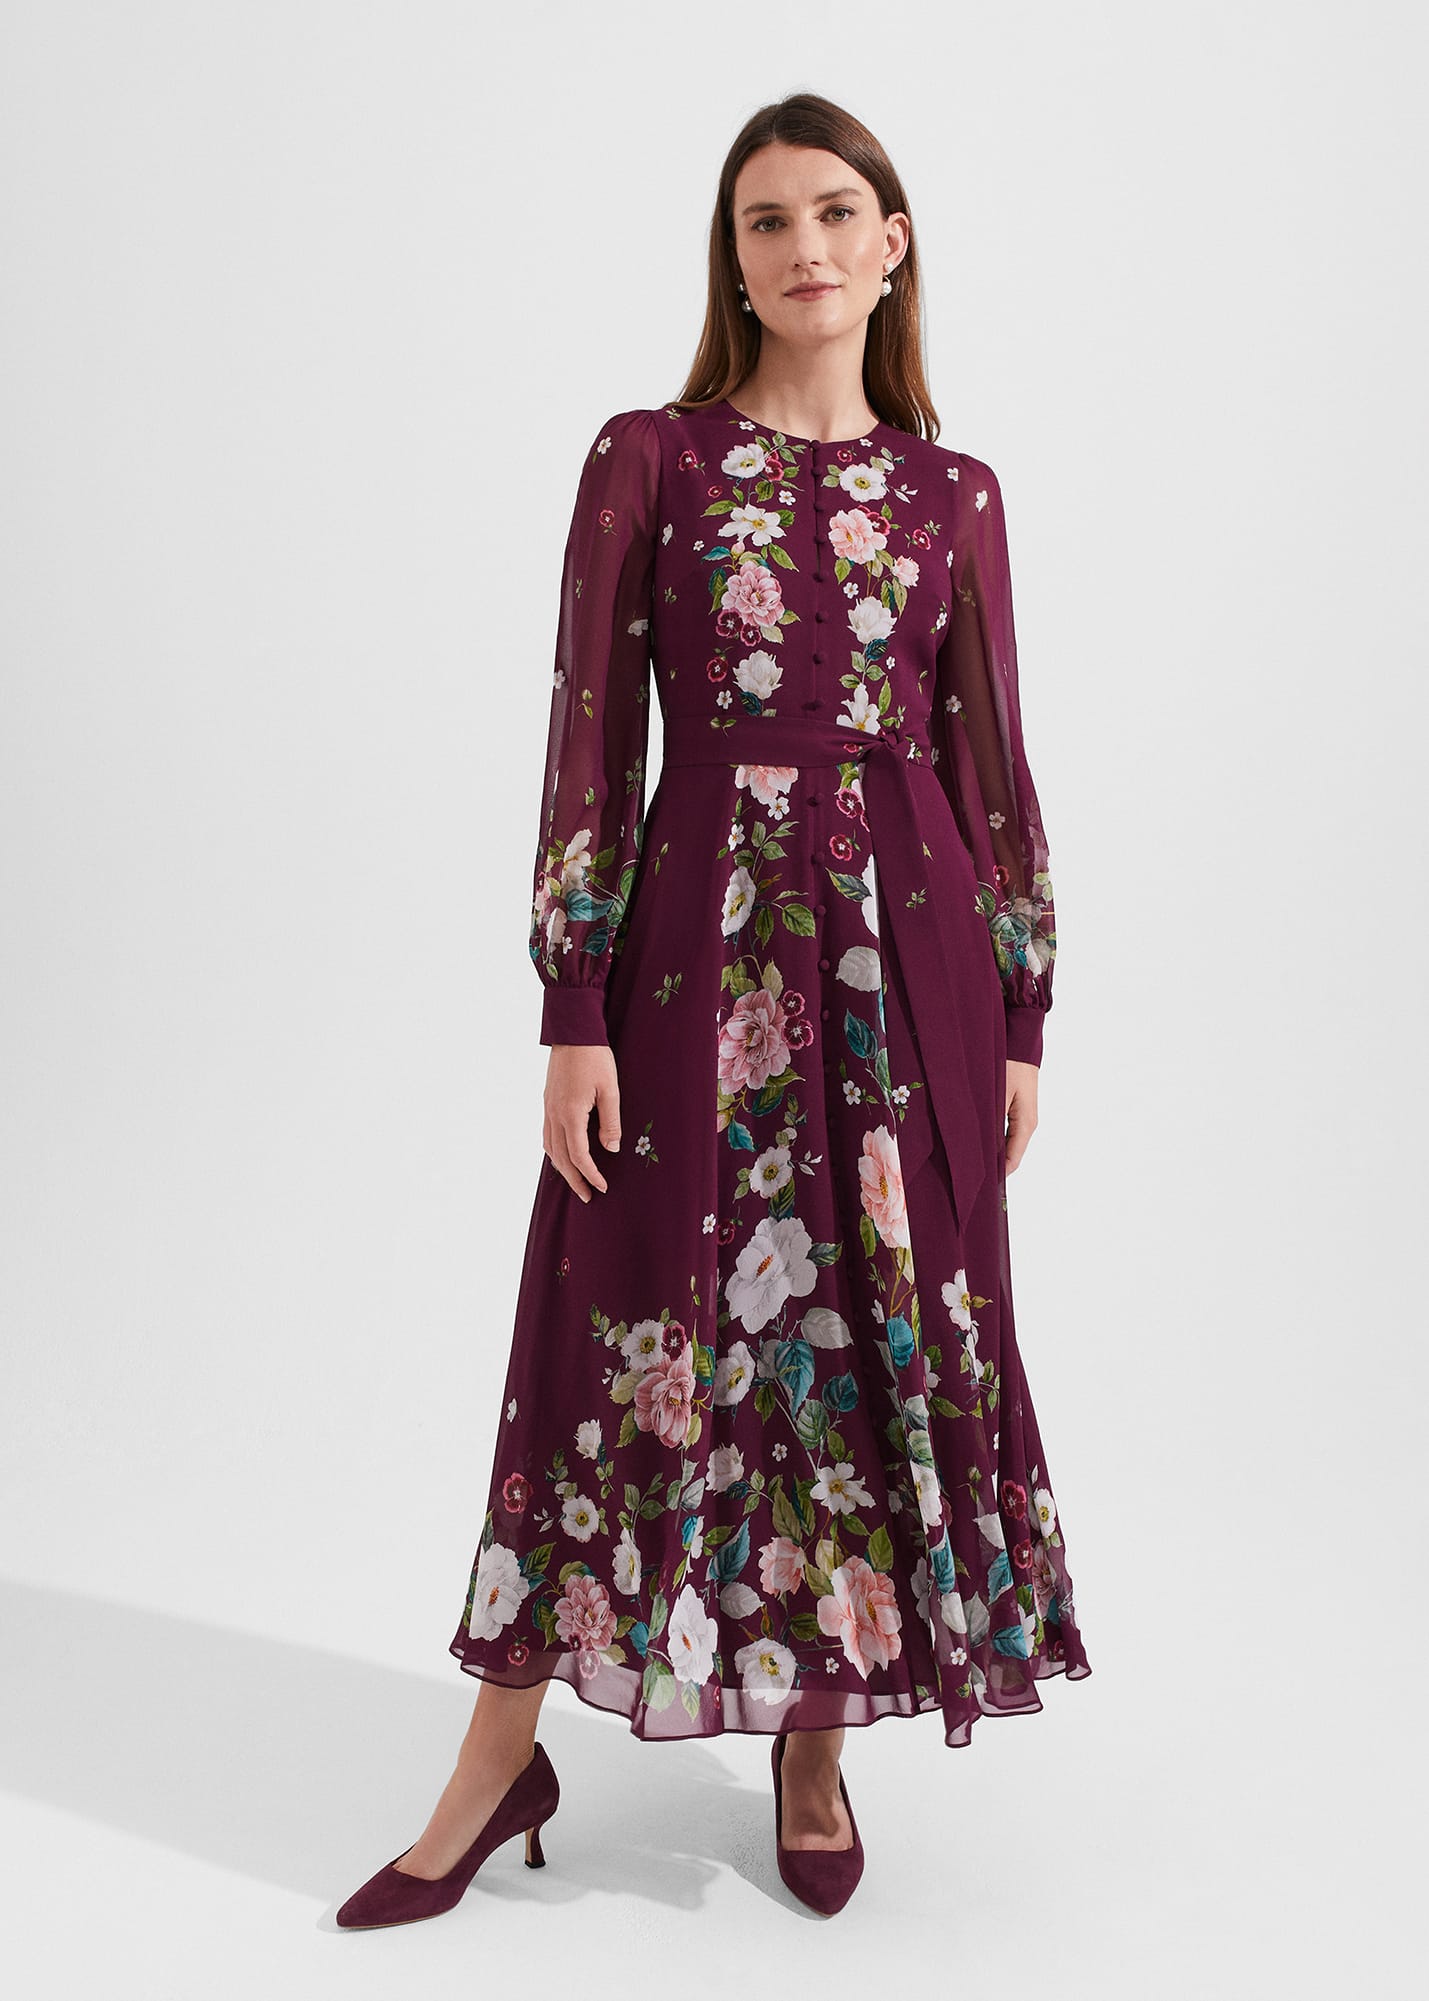 Hobbs Women's Maribella Silk Floral Dress - Burgundy Multi